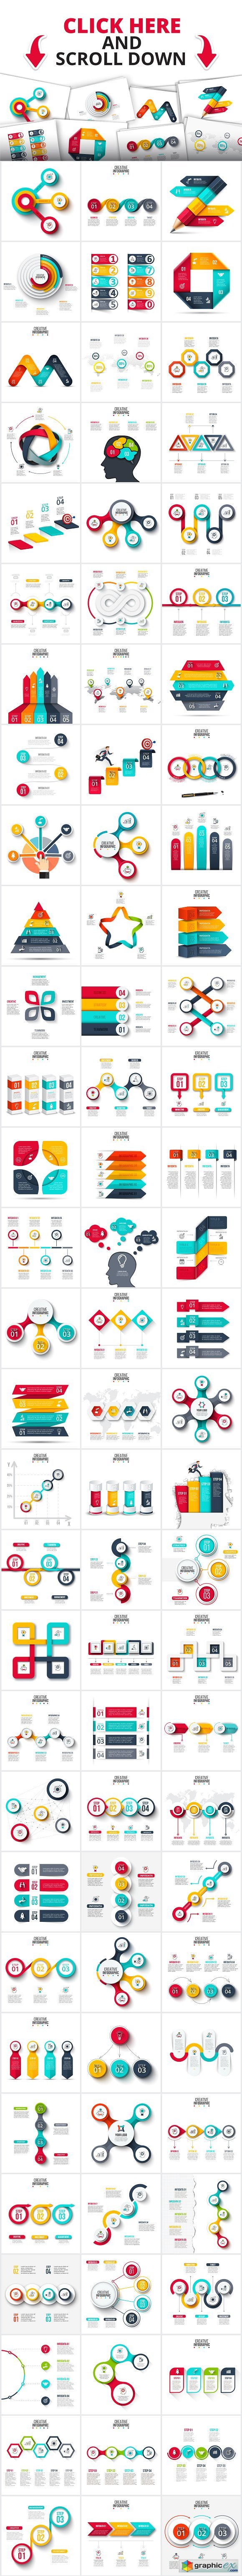 Creative infographics templates